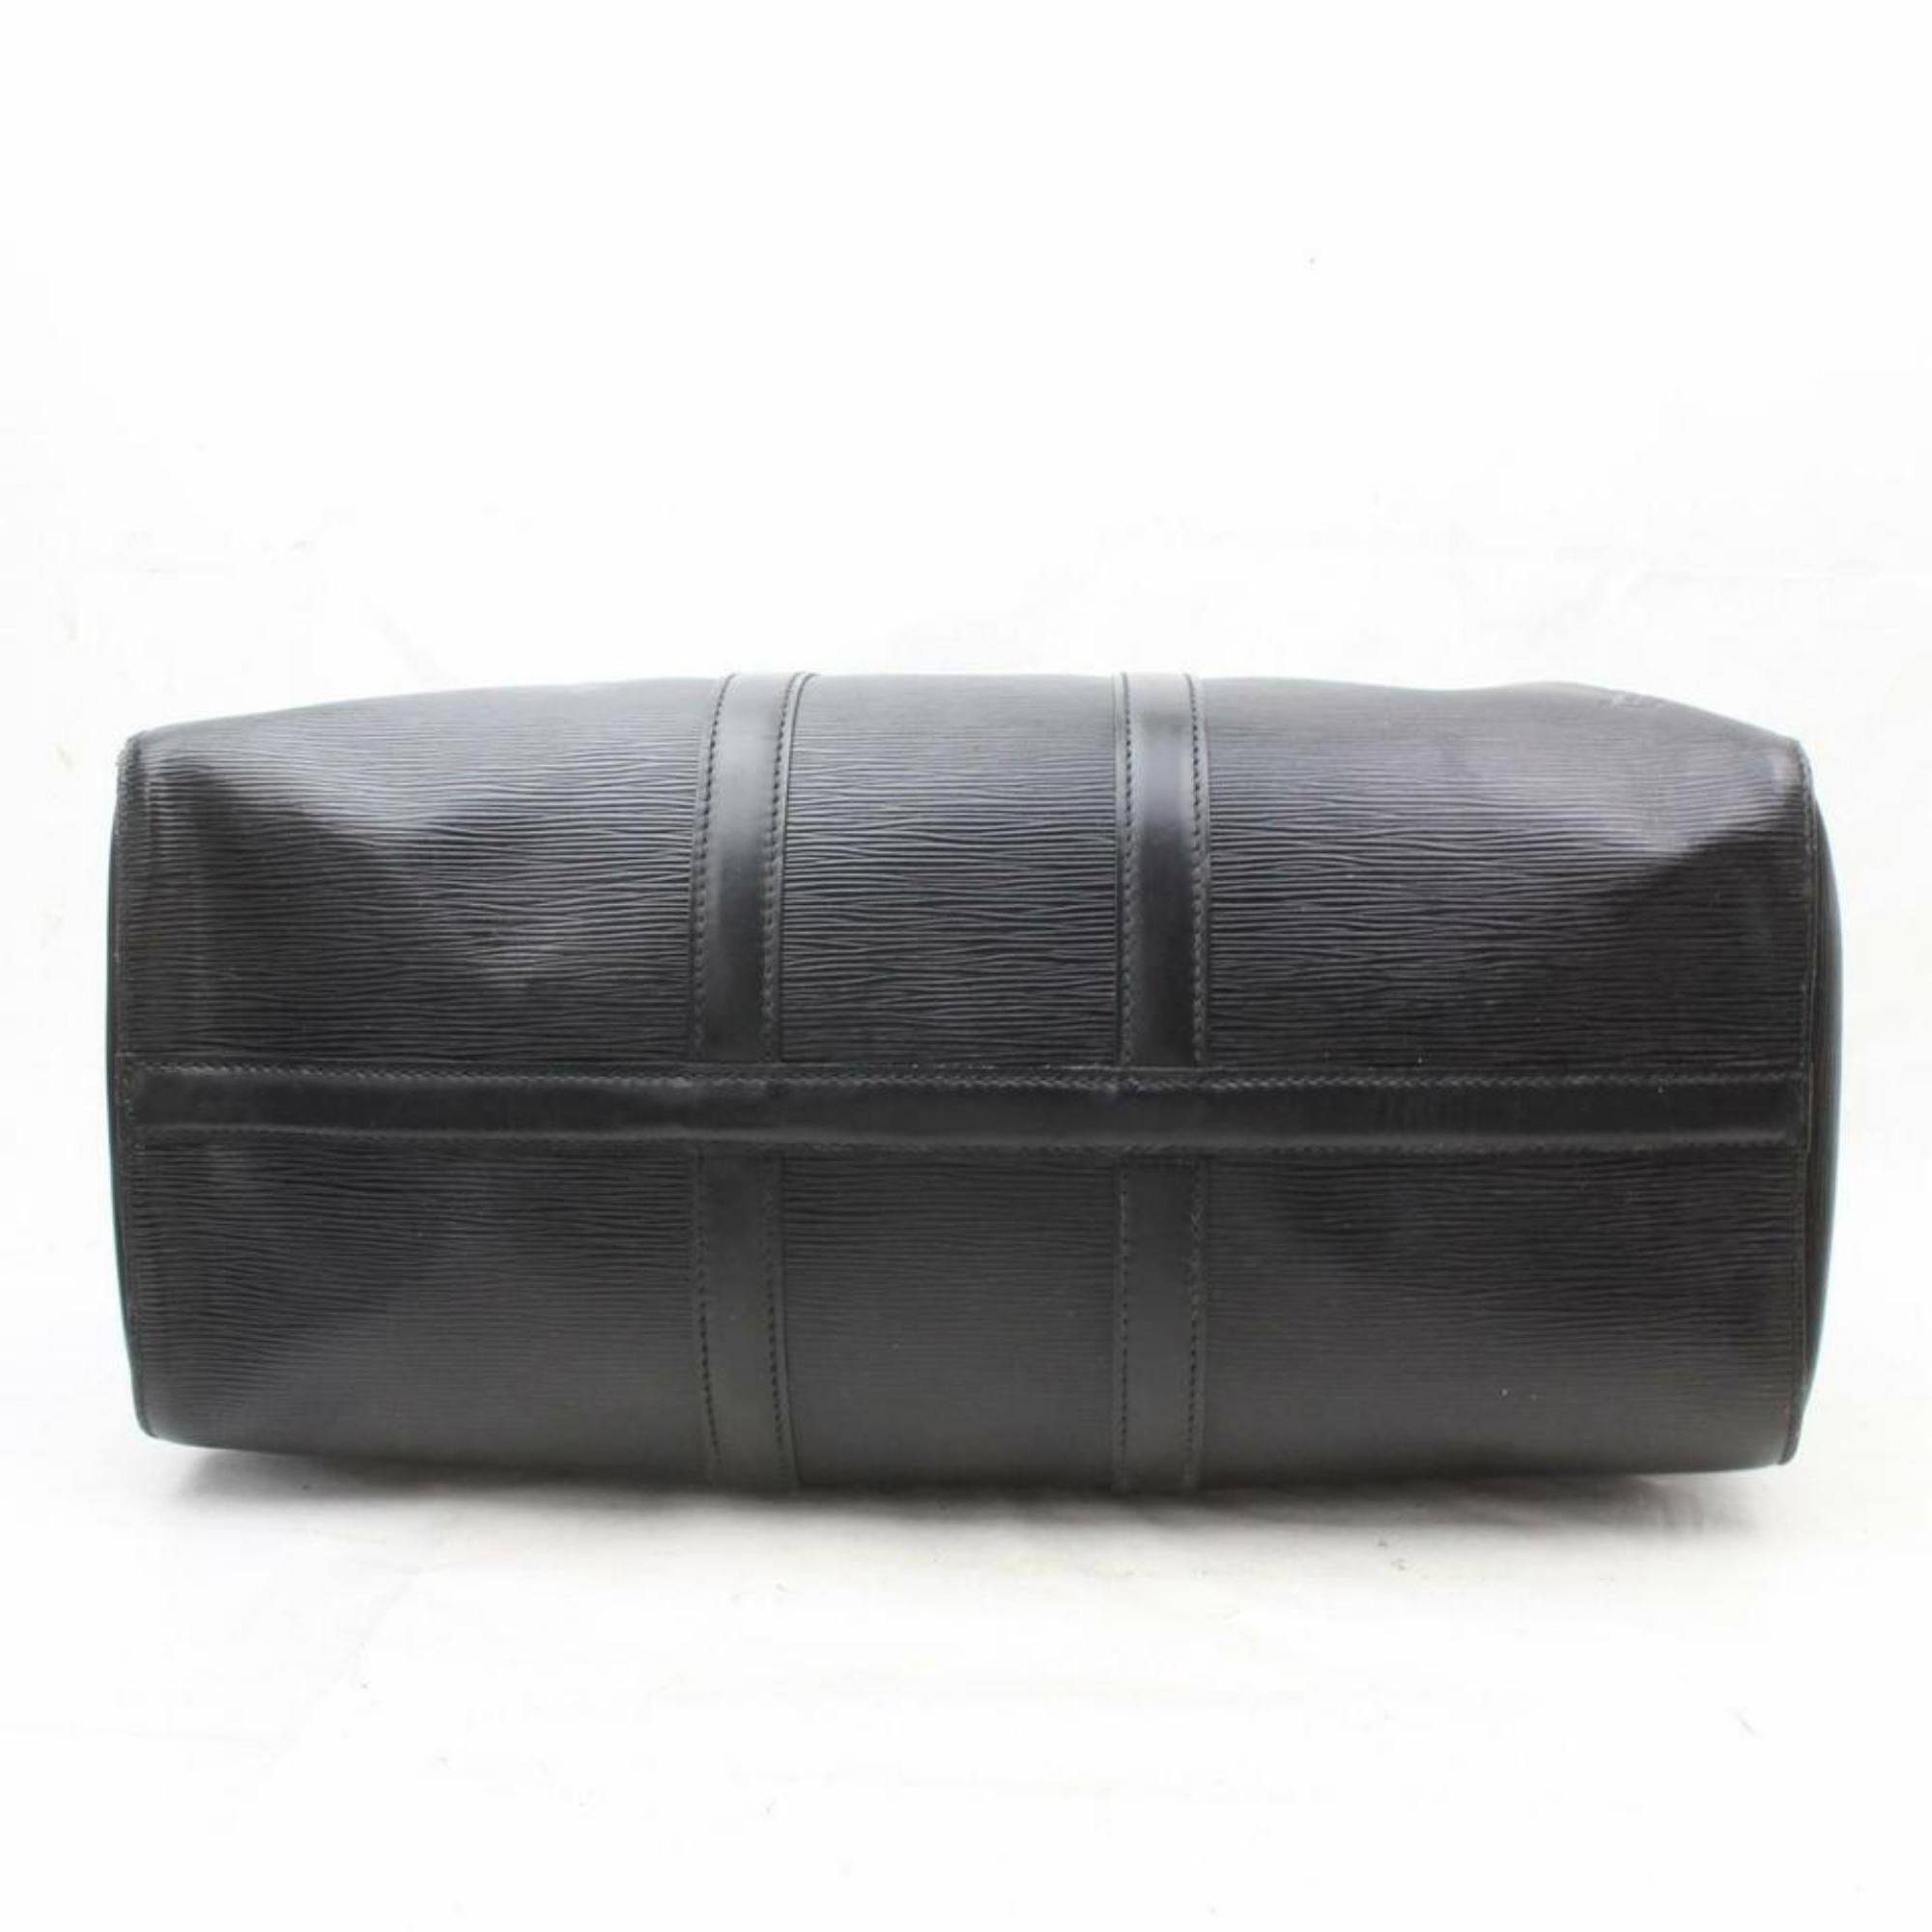 Louis Vuitton Keepall Duffle Noir 45 870140 Black Leather Weekend/Travel Bag For Sale 3